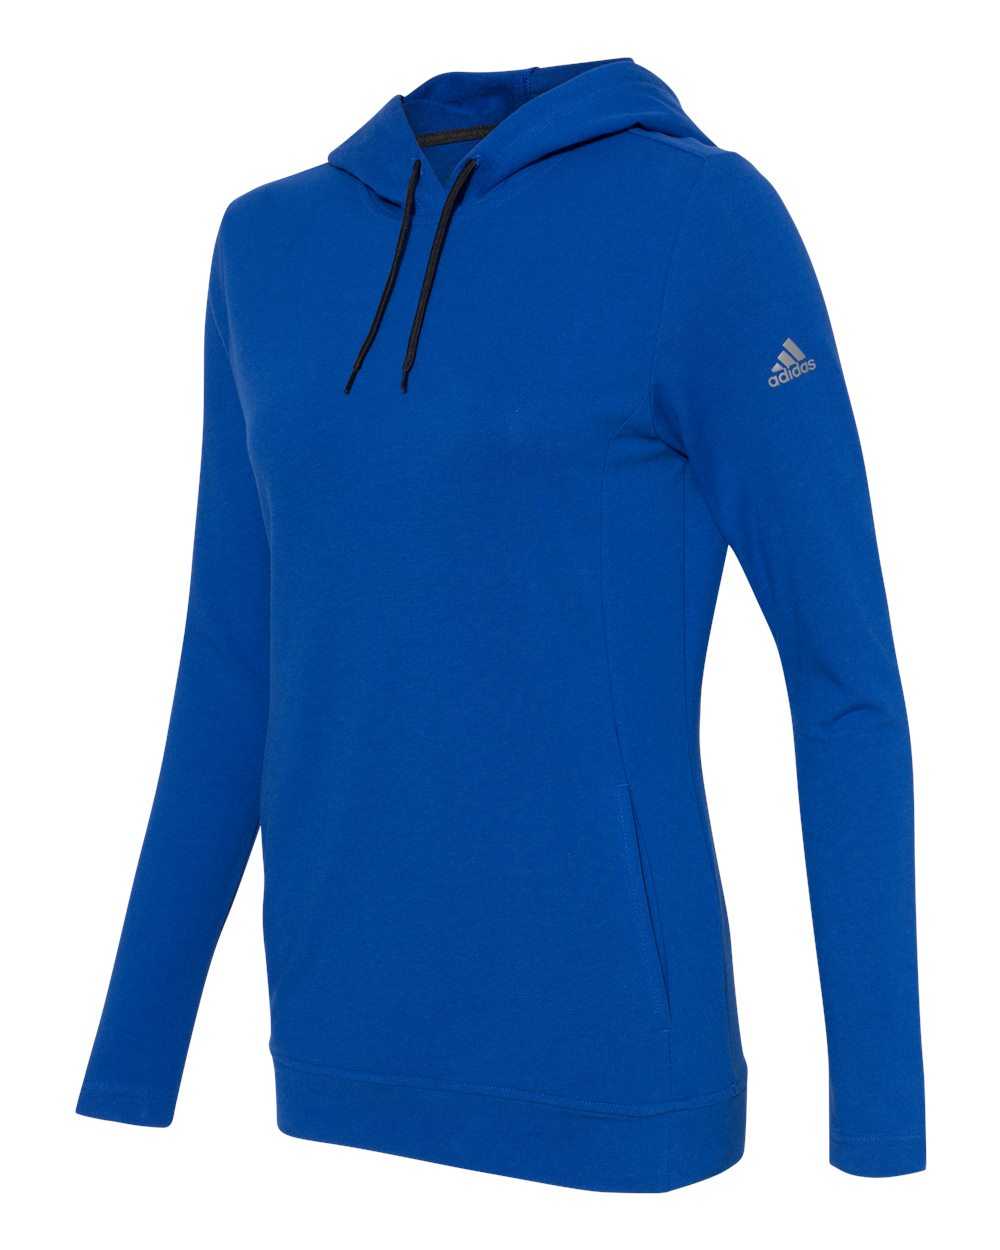 Adidas A451 Women's Lightweight Hooded Sweatshirt - Collegiate Royal - HIT a Double